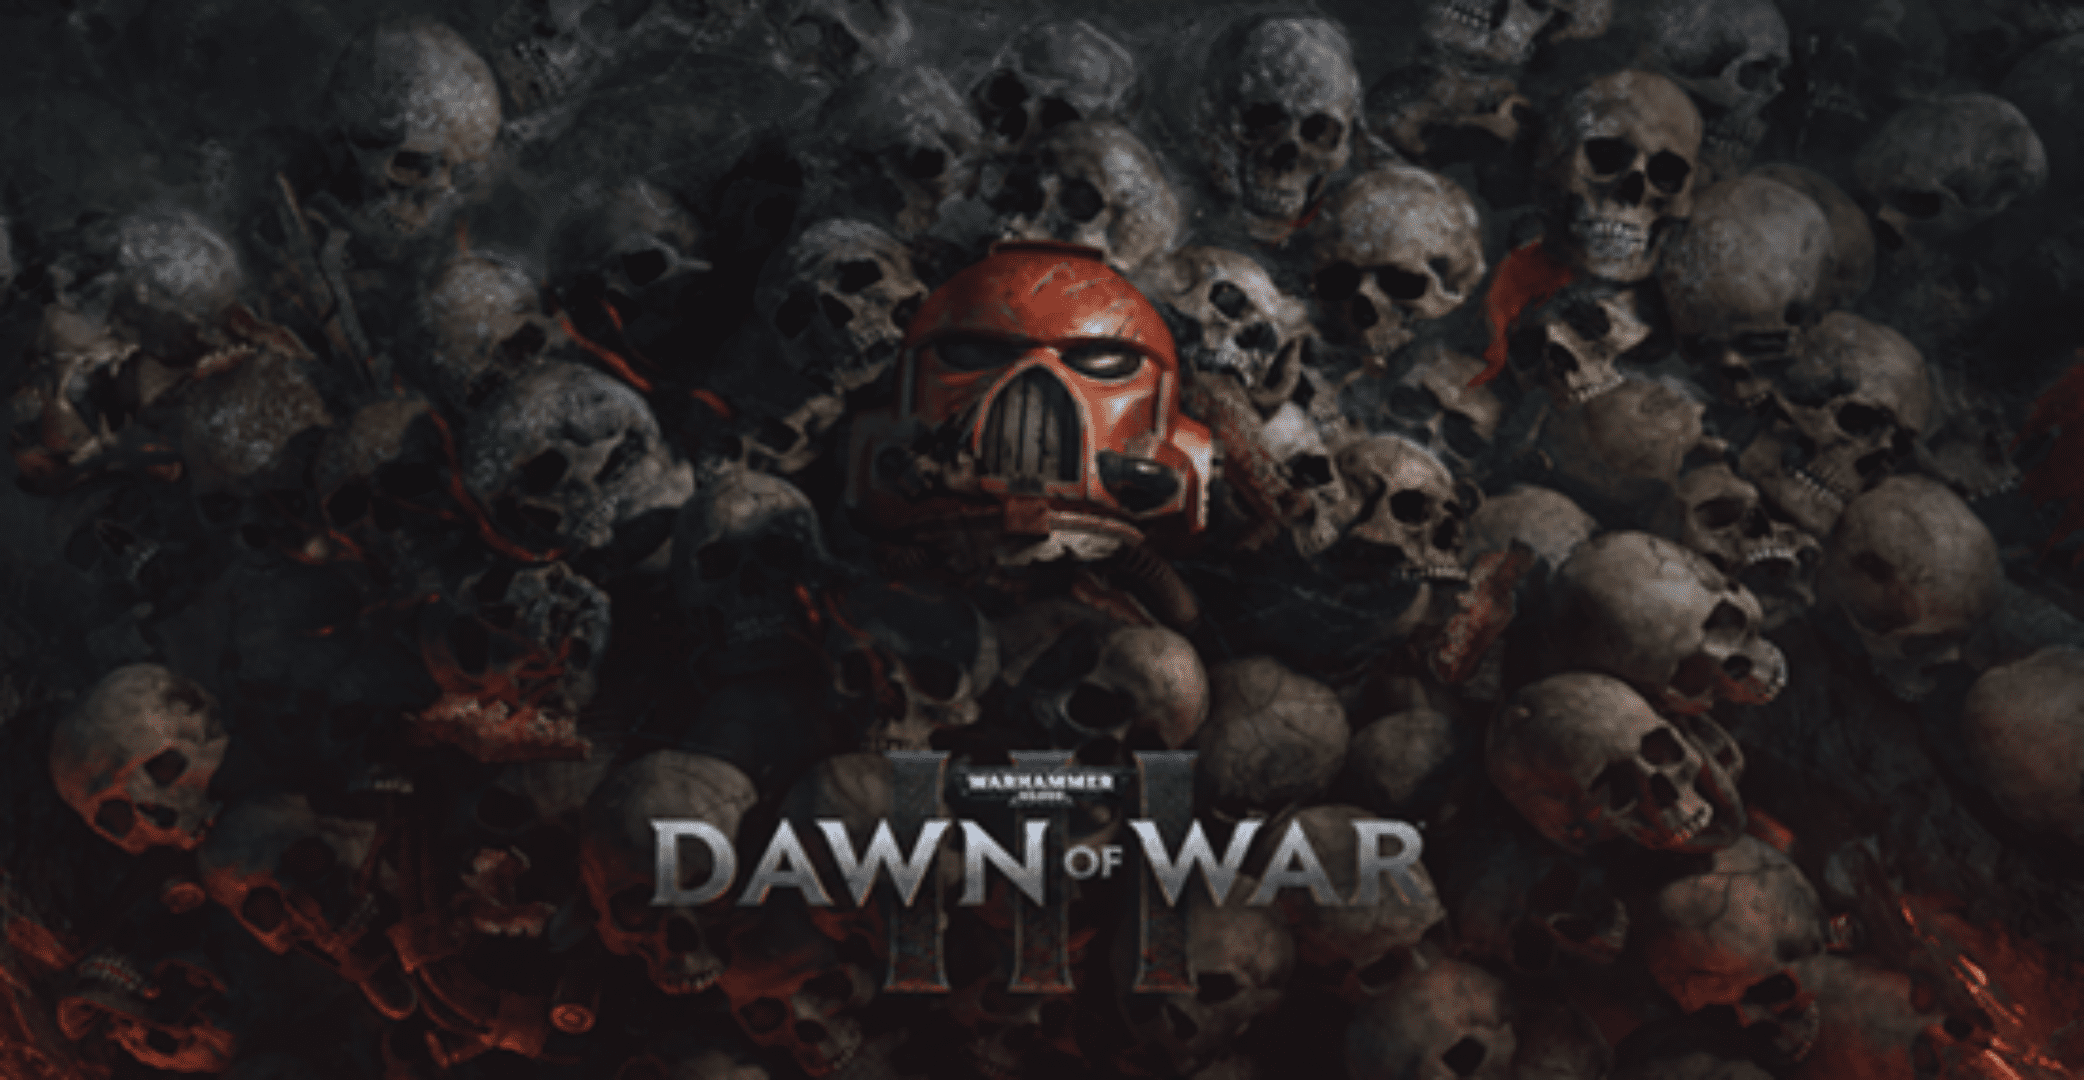 First Eldar Super Unit Reveal in WARHAMMER 40,000: Dawn of War III: Wraithknight